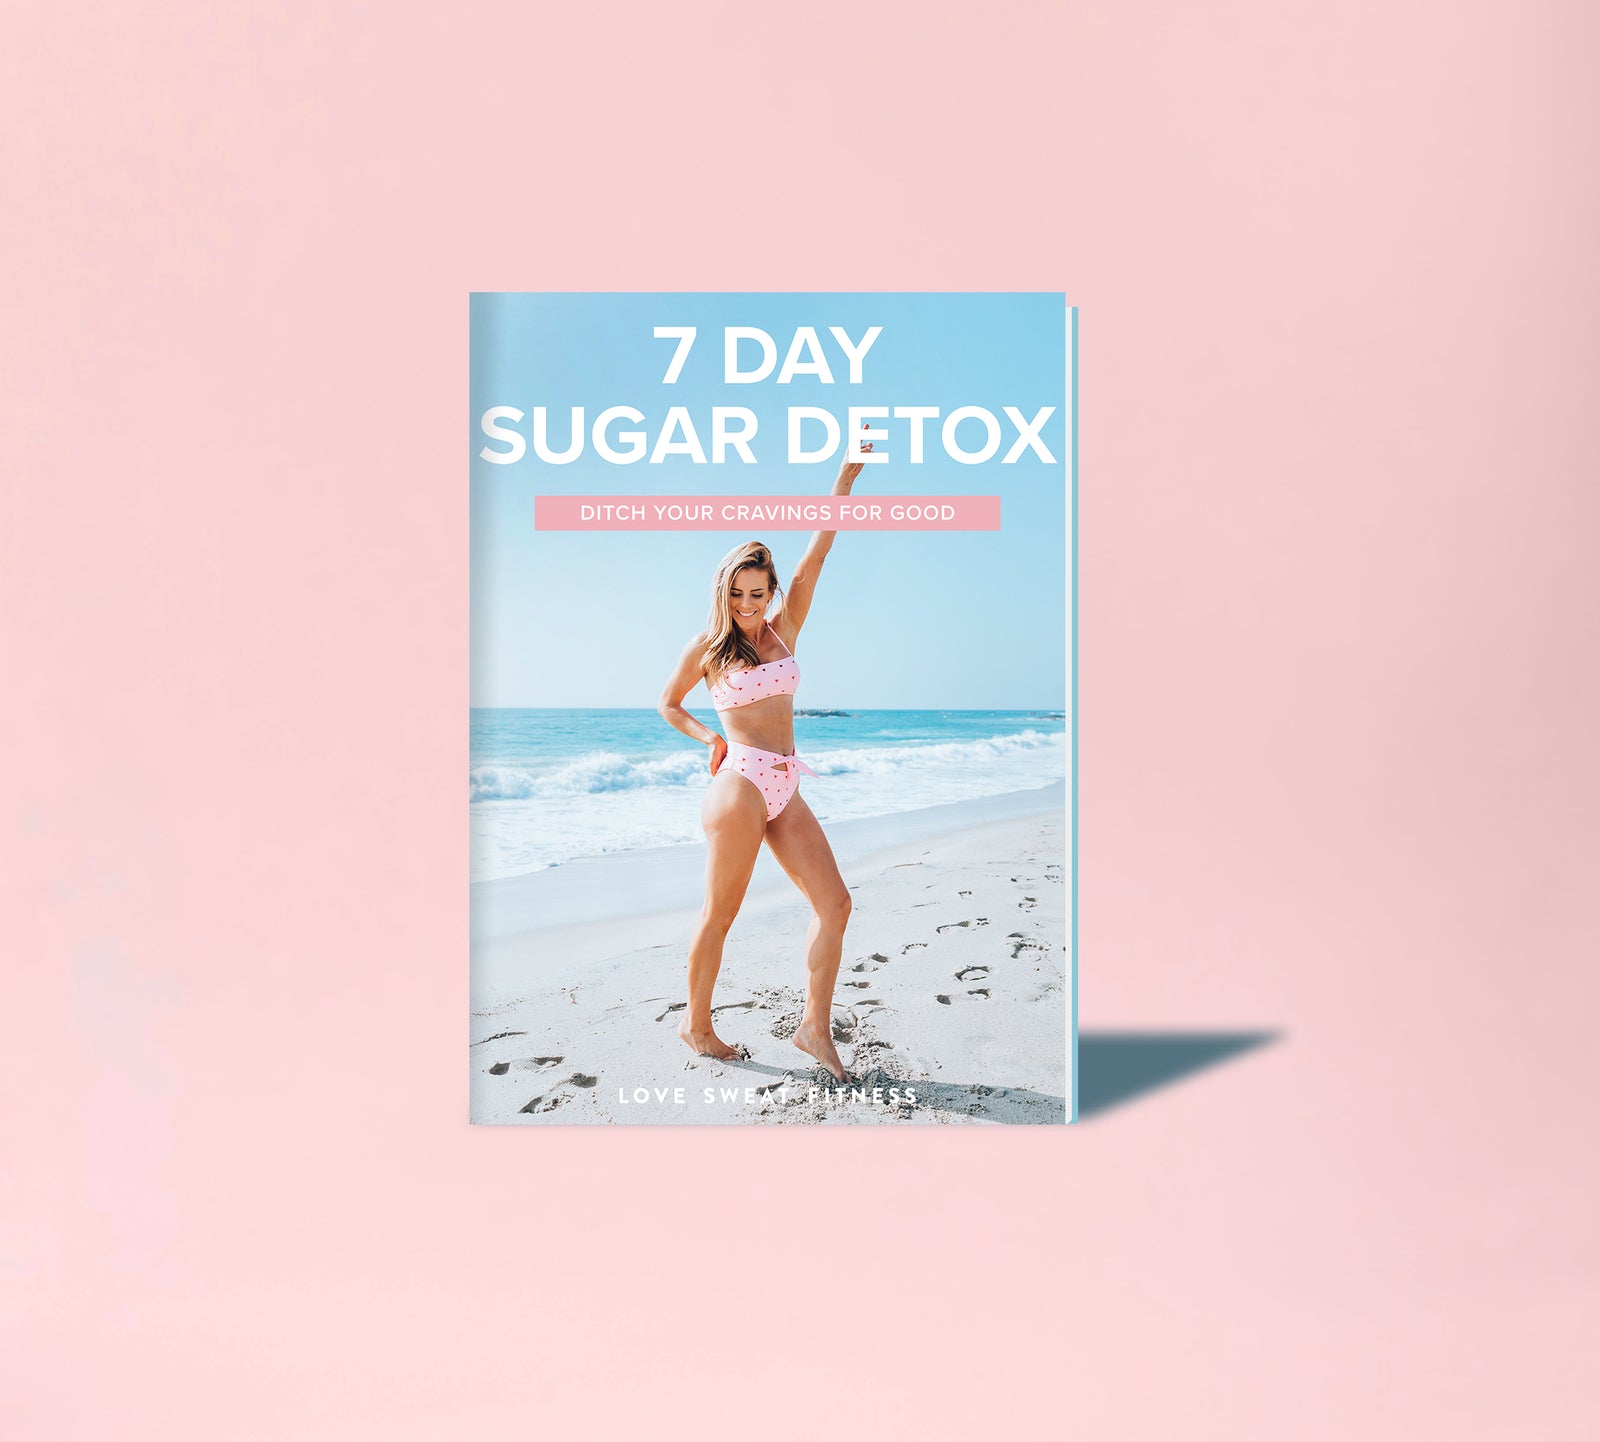 7 Day Sugar Detox Guide